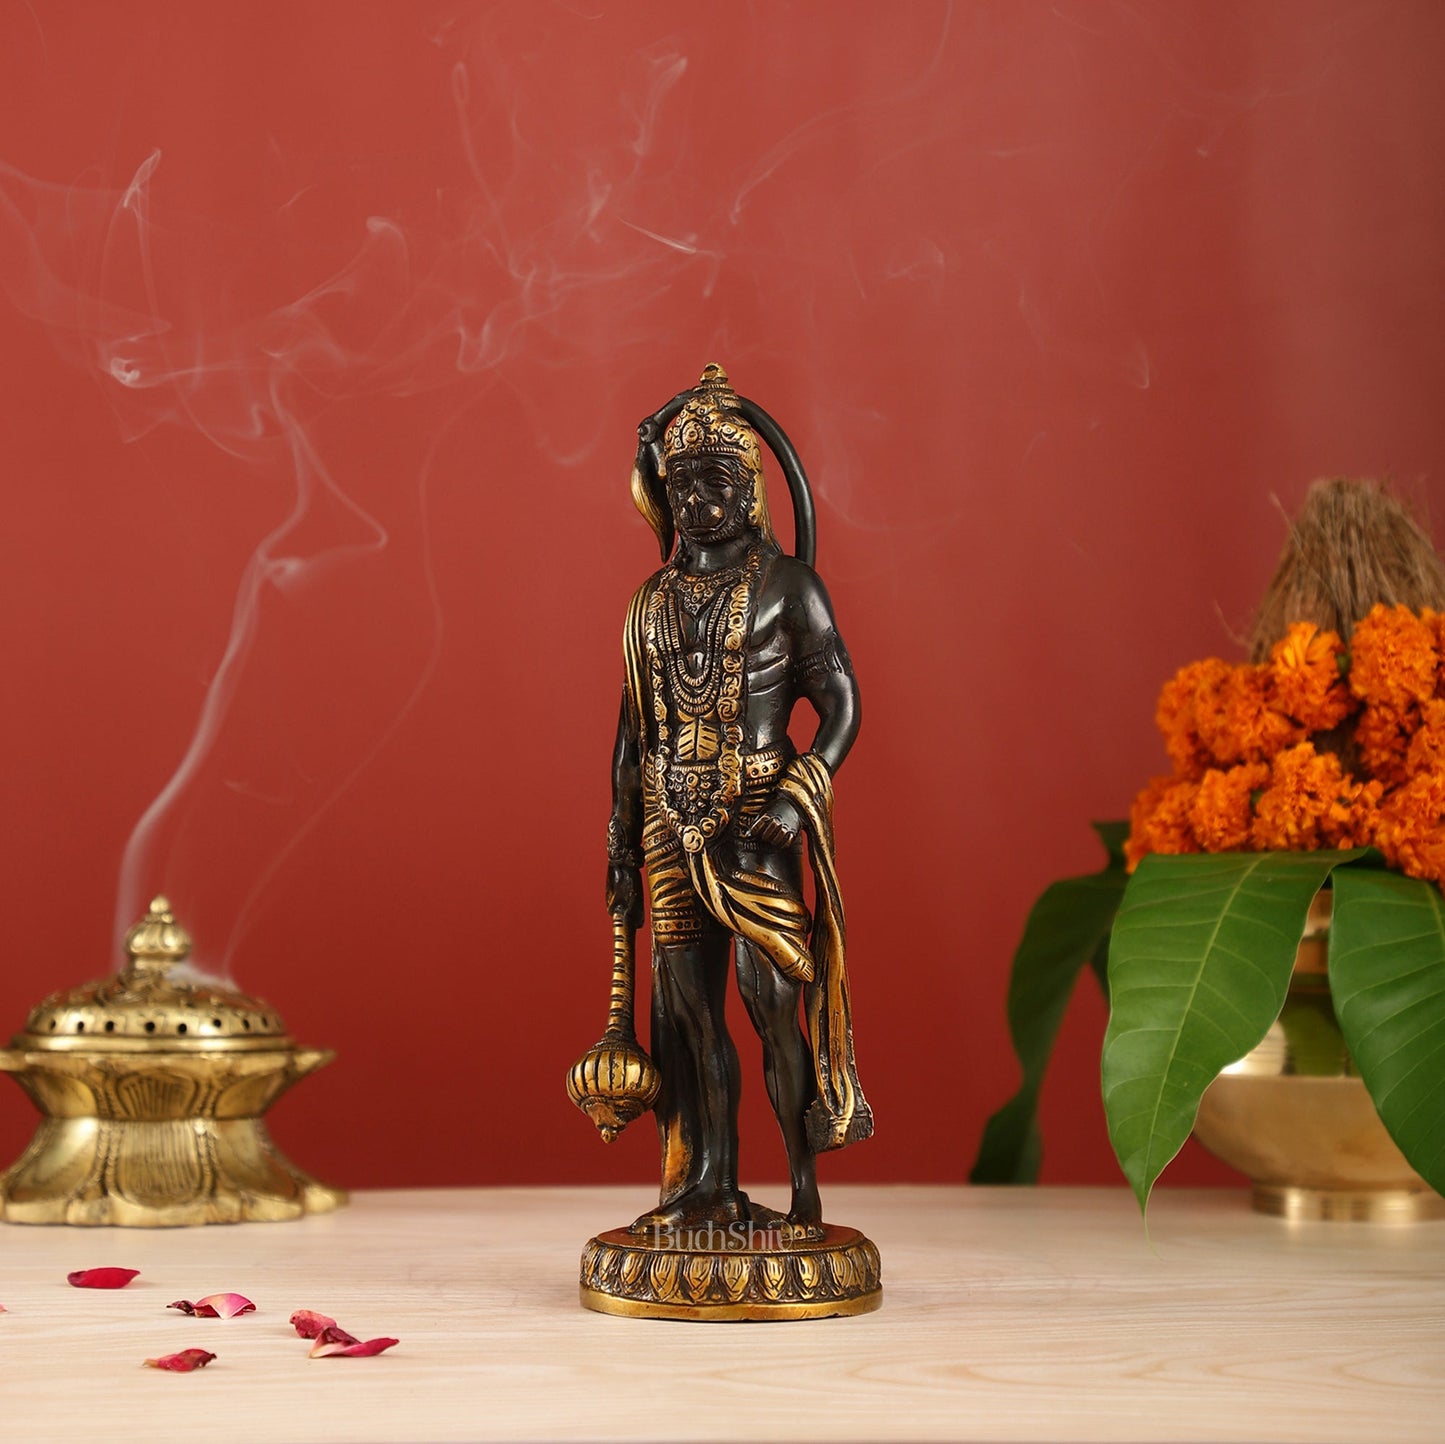 Handmade Brass Lord Hanuman Statue | Black and Gold Finish | 10" Height - Budhshiv.com